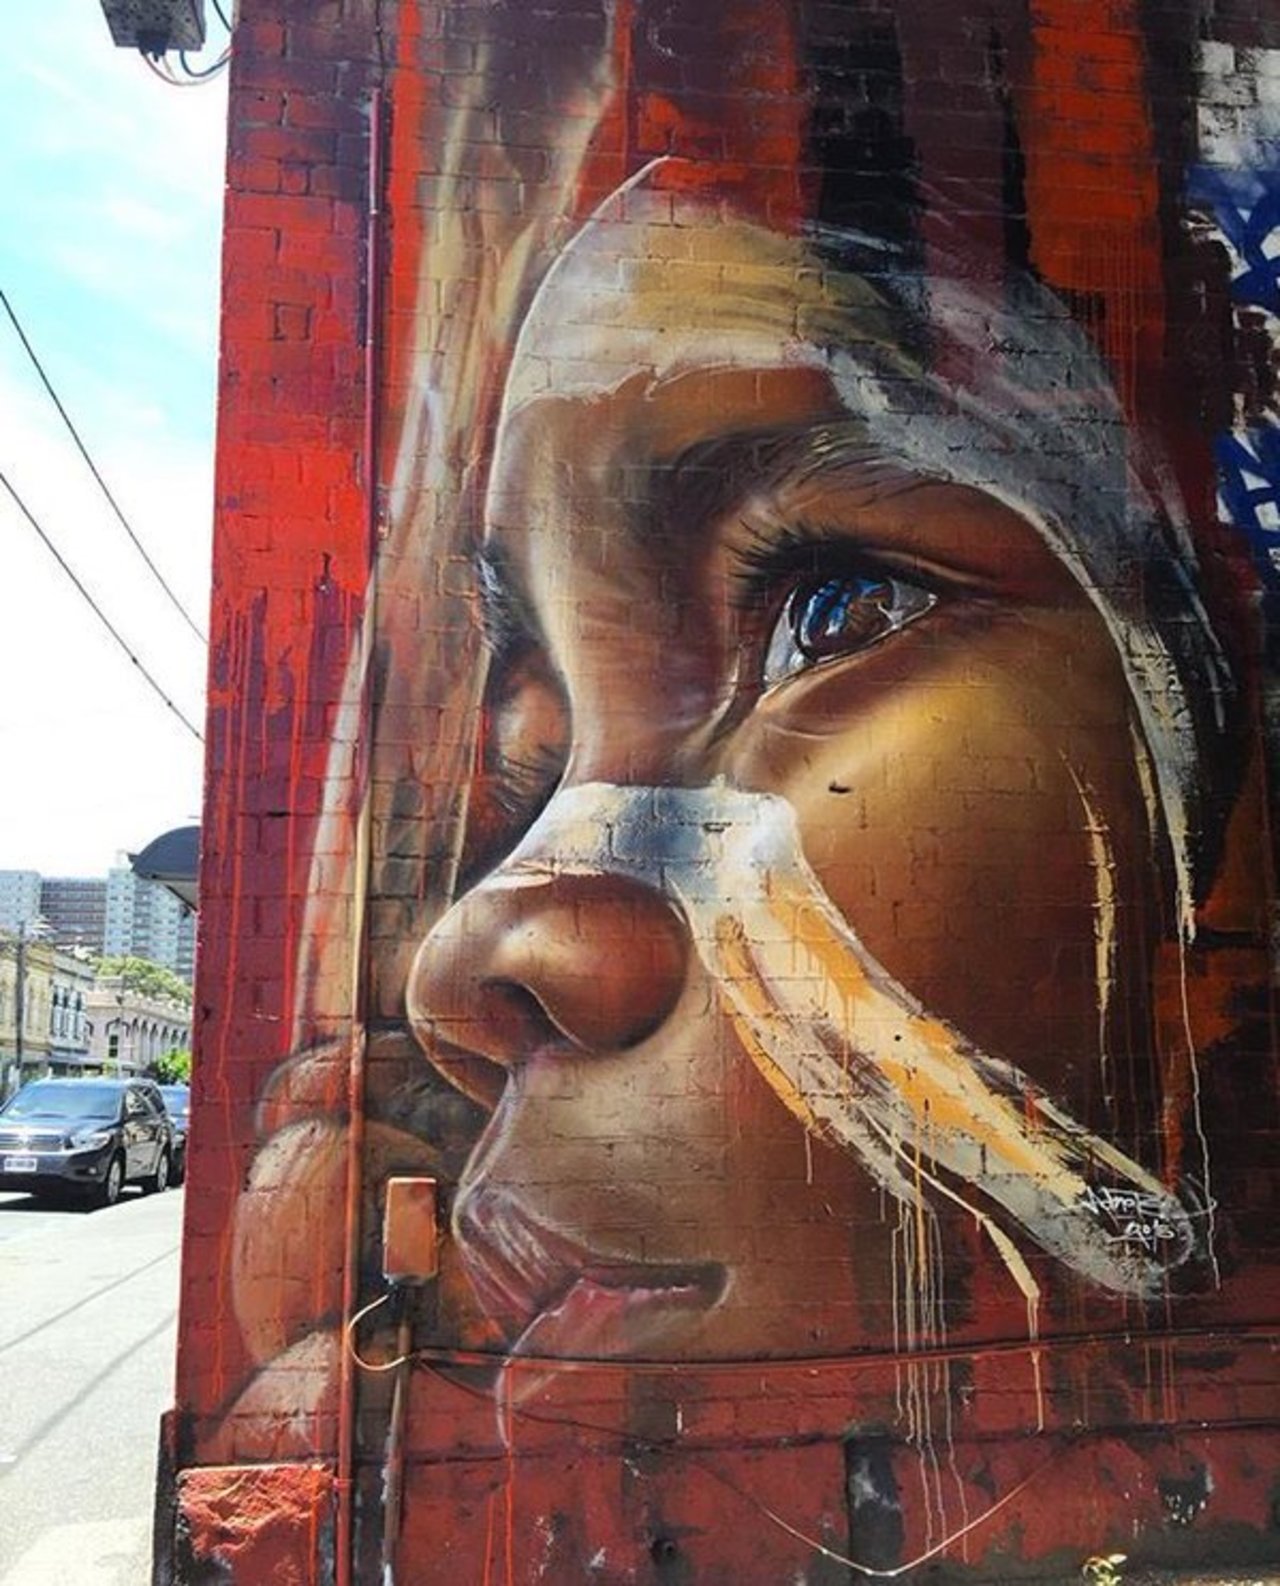 Street Art • Adnate #graffiti #art #mural #streetart https://t.co/HGyKYBnWAM